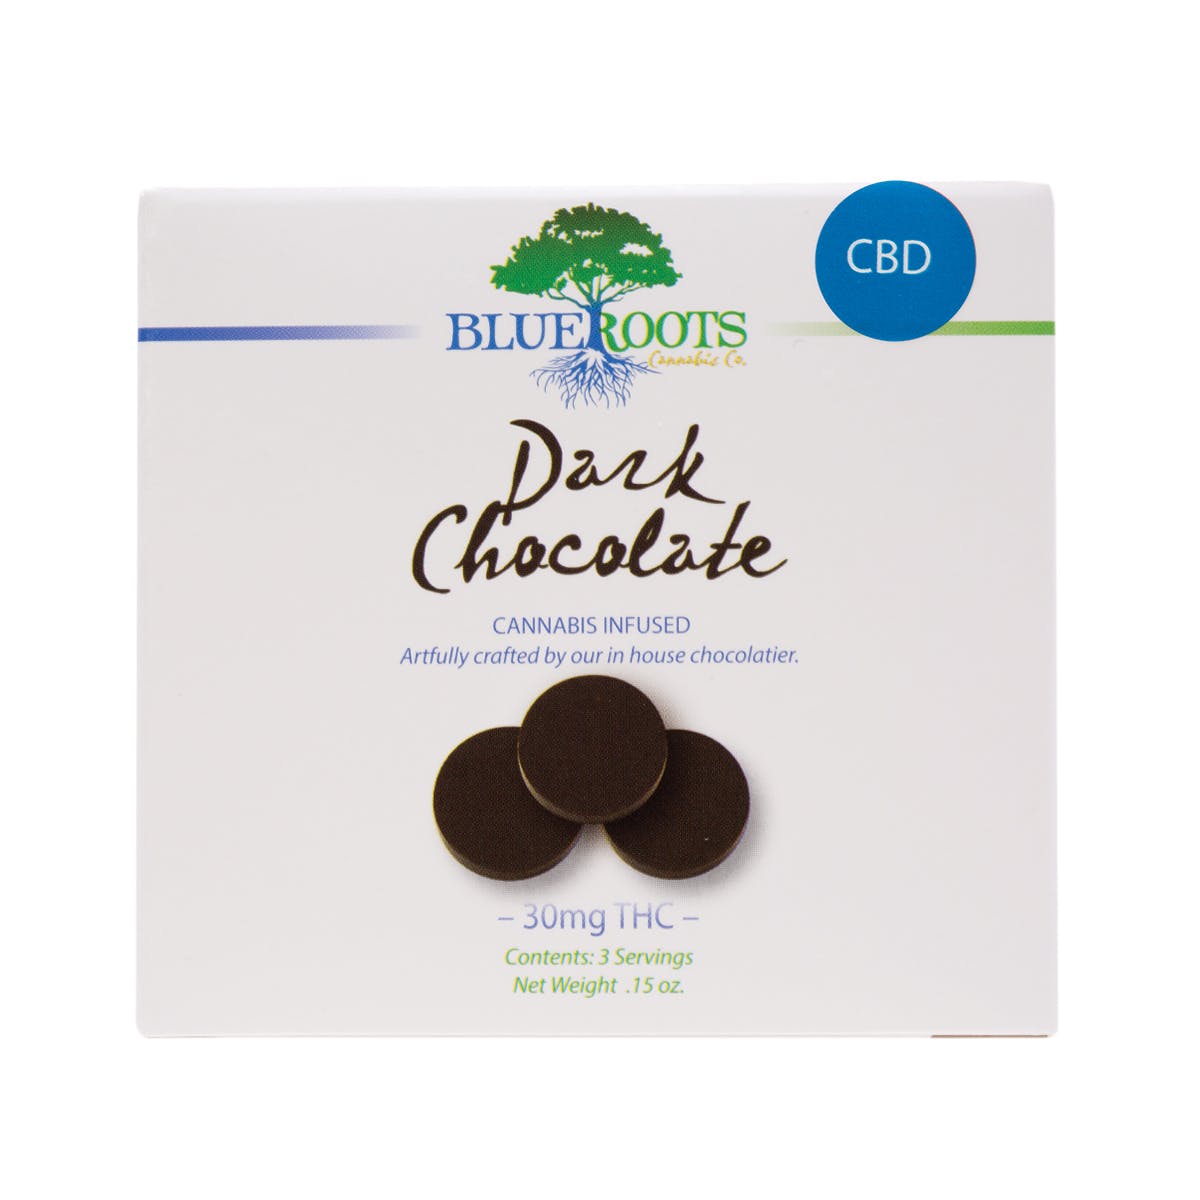 Dark Chocolate CBD Only, 30mg